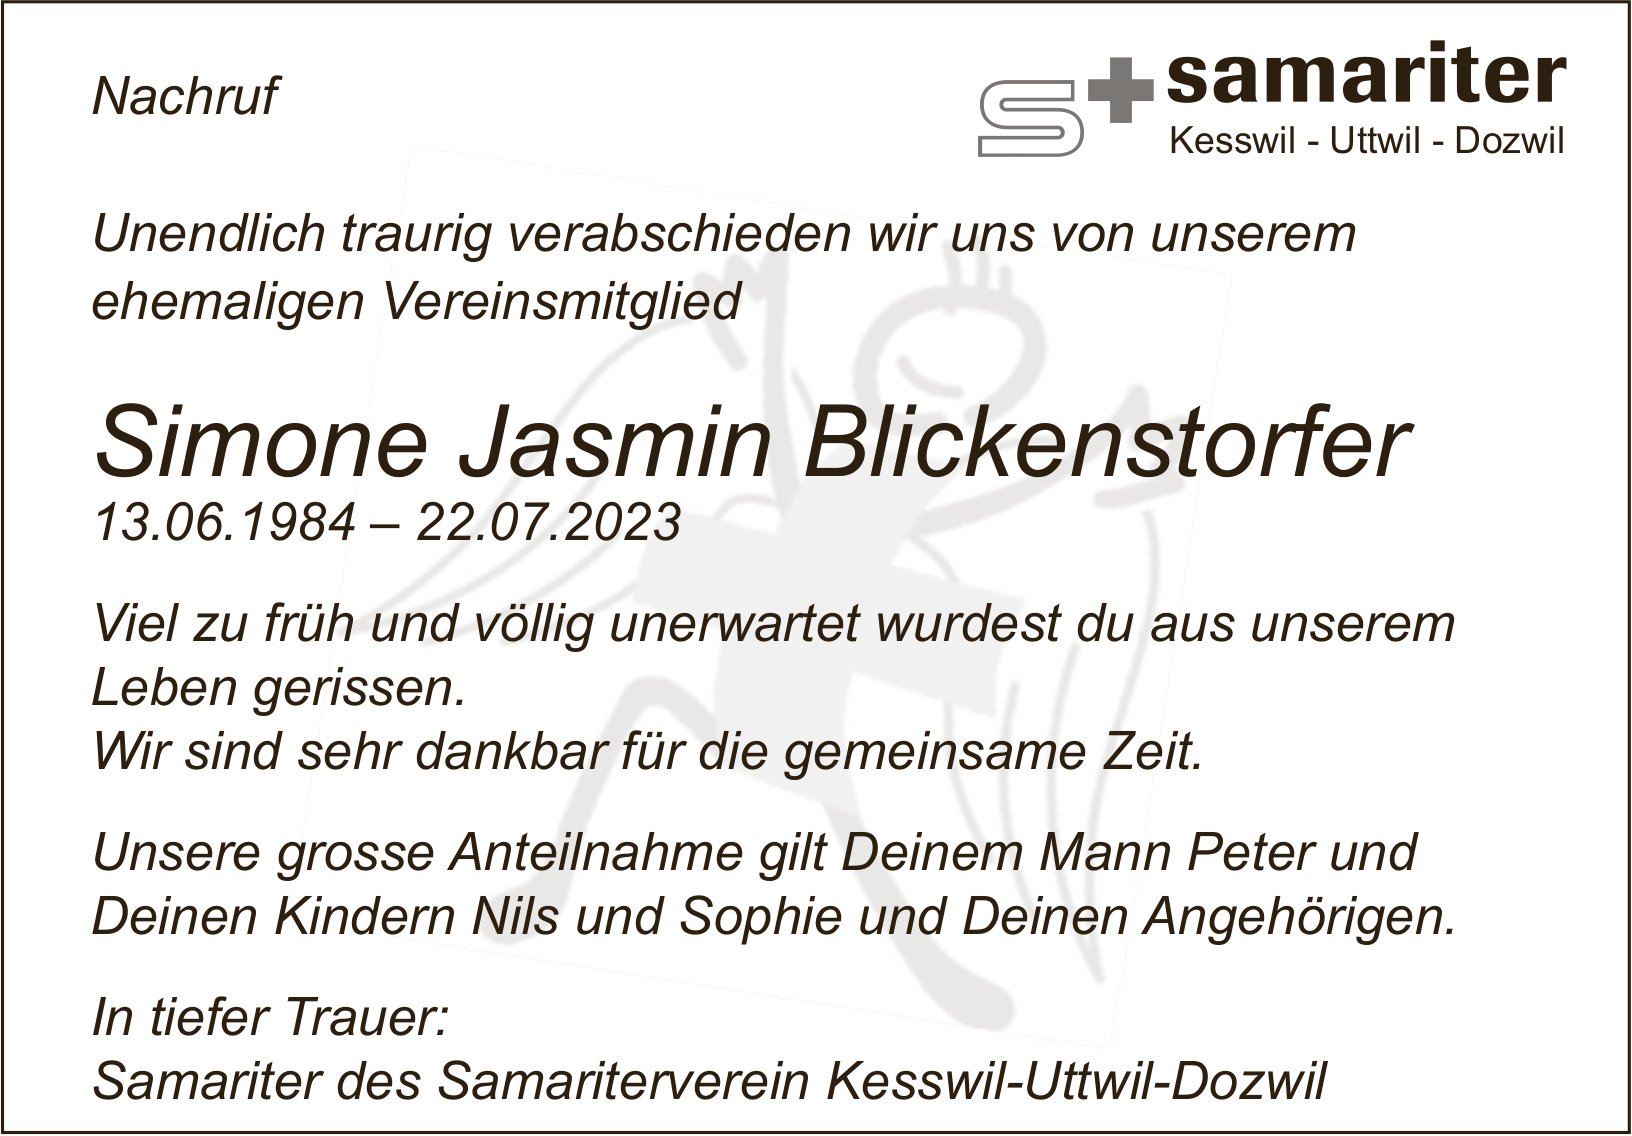 Blickenstorfer Simone Jasmin, Juli 2023 / TA